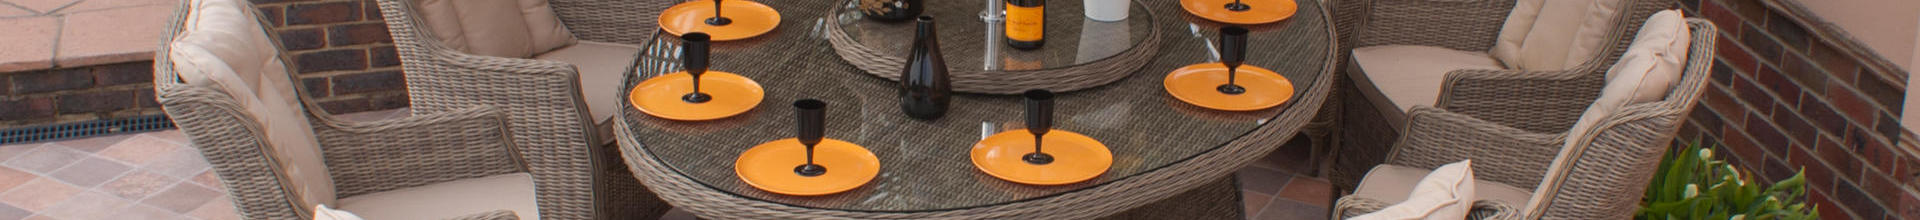 Rioja 210x150cm Elliptical Dining Set